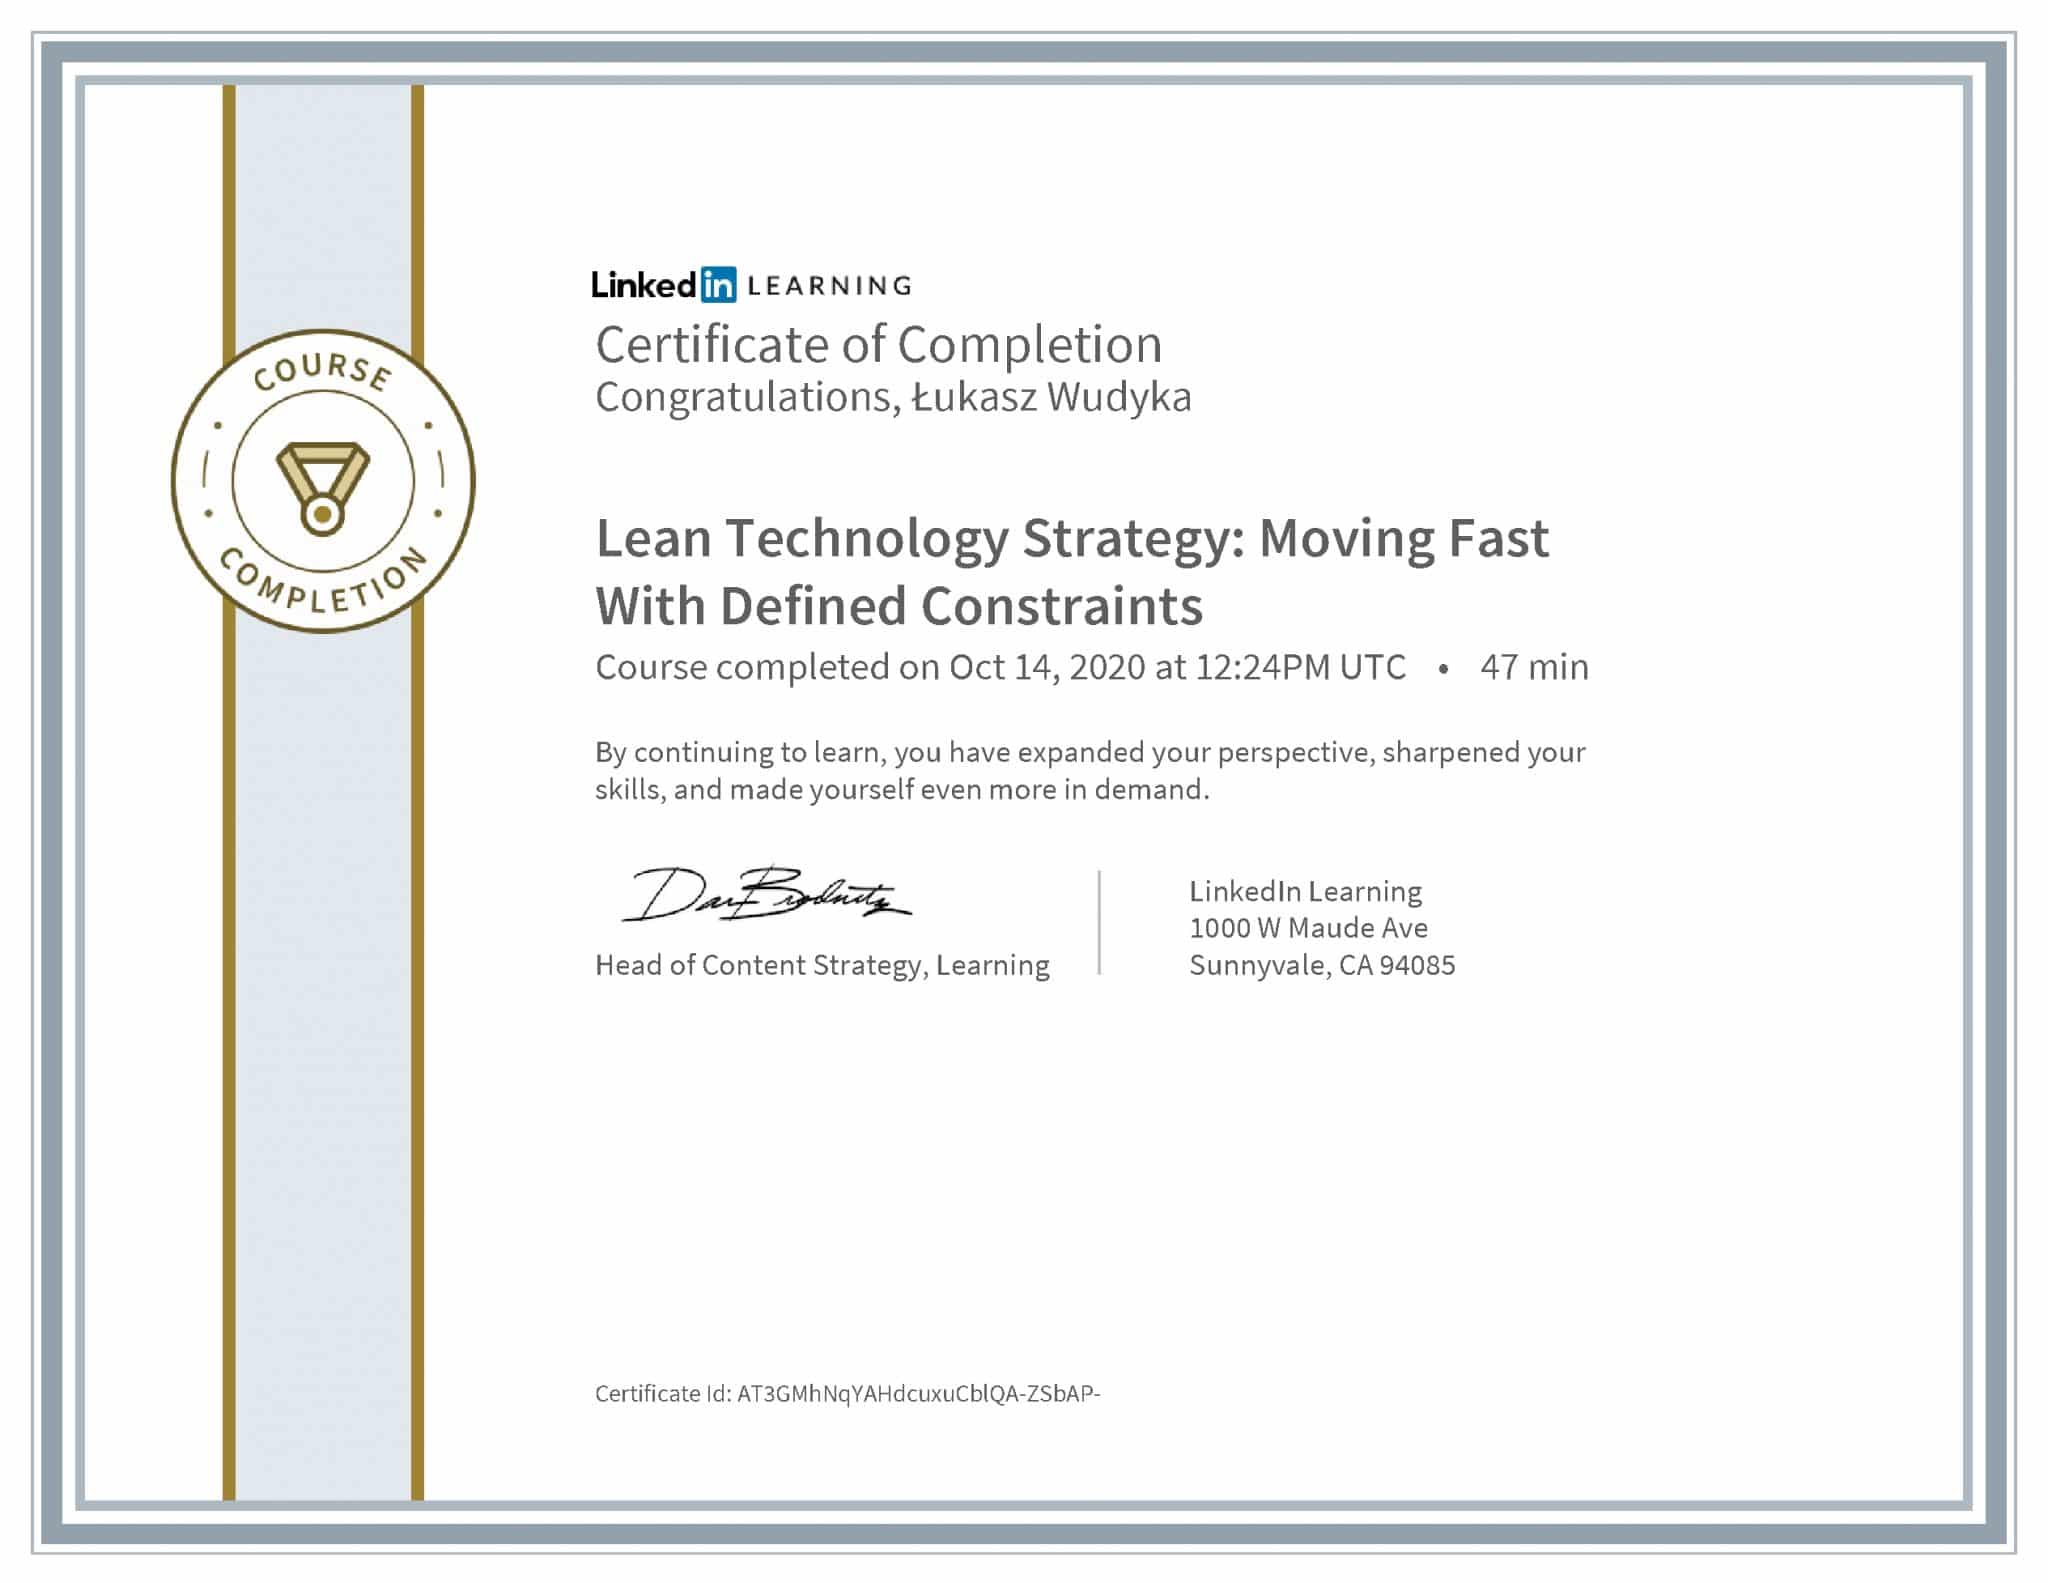 Łukasz Wudyka certyfikat LinkedIn Lean Technology Strategy: Moving Fast With Defined Constraints